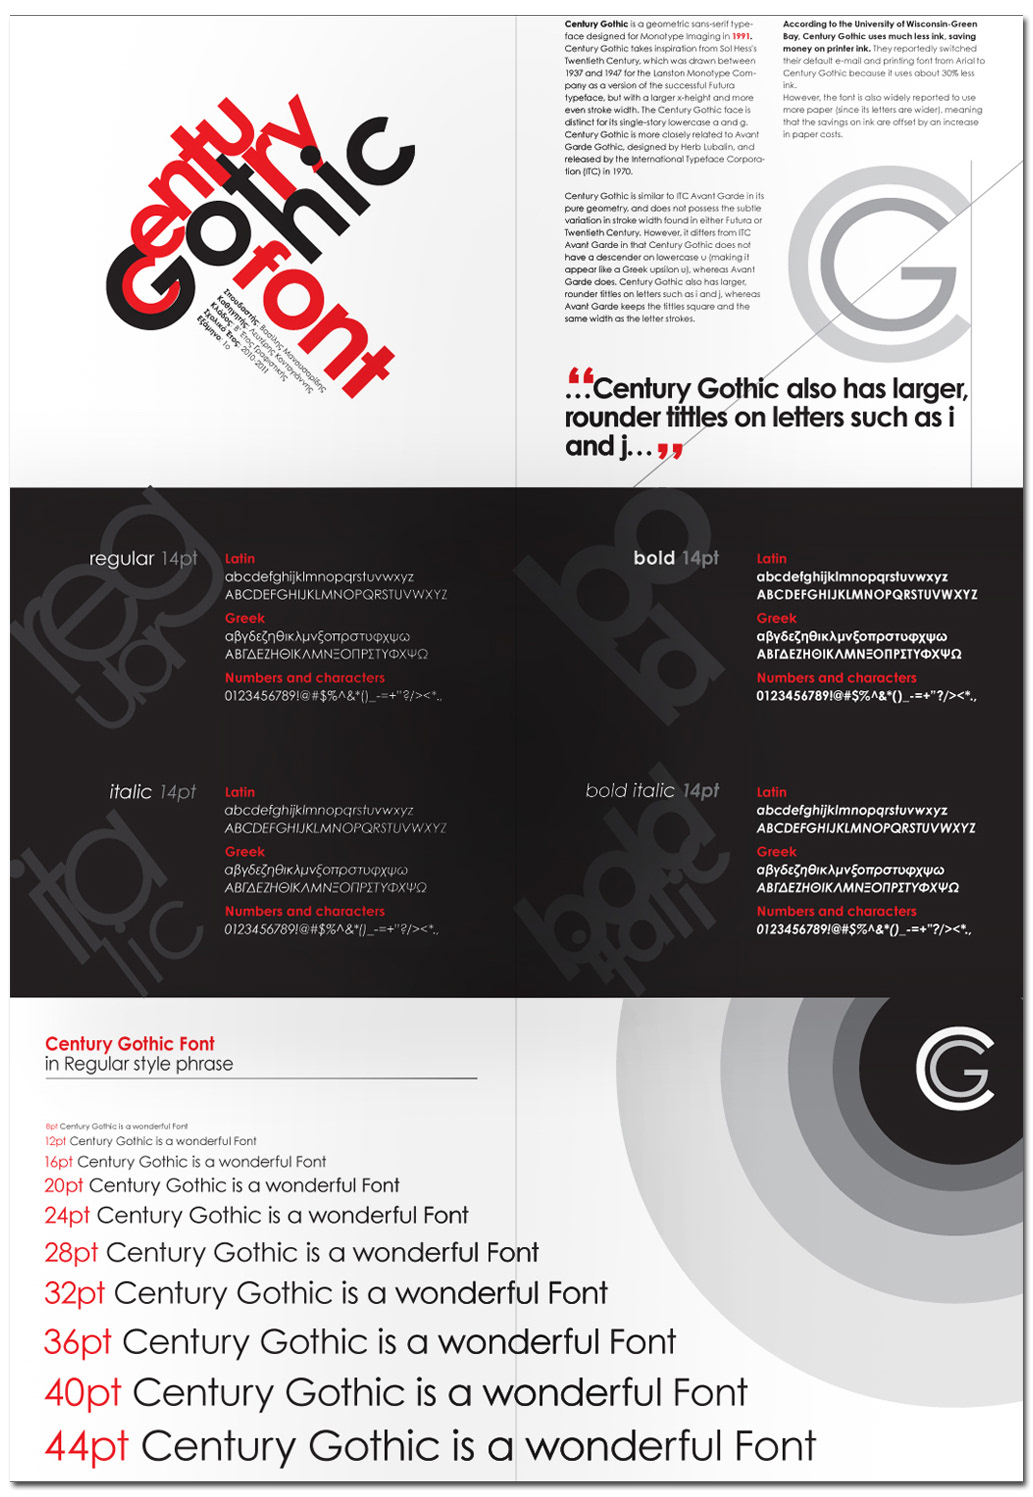 vasilis manou Century Gothic century gothic font font ad font brochure font promotion